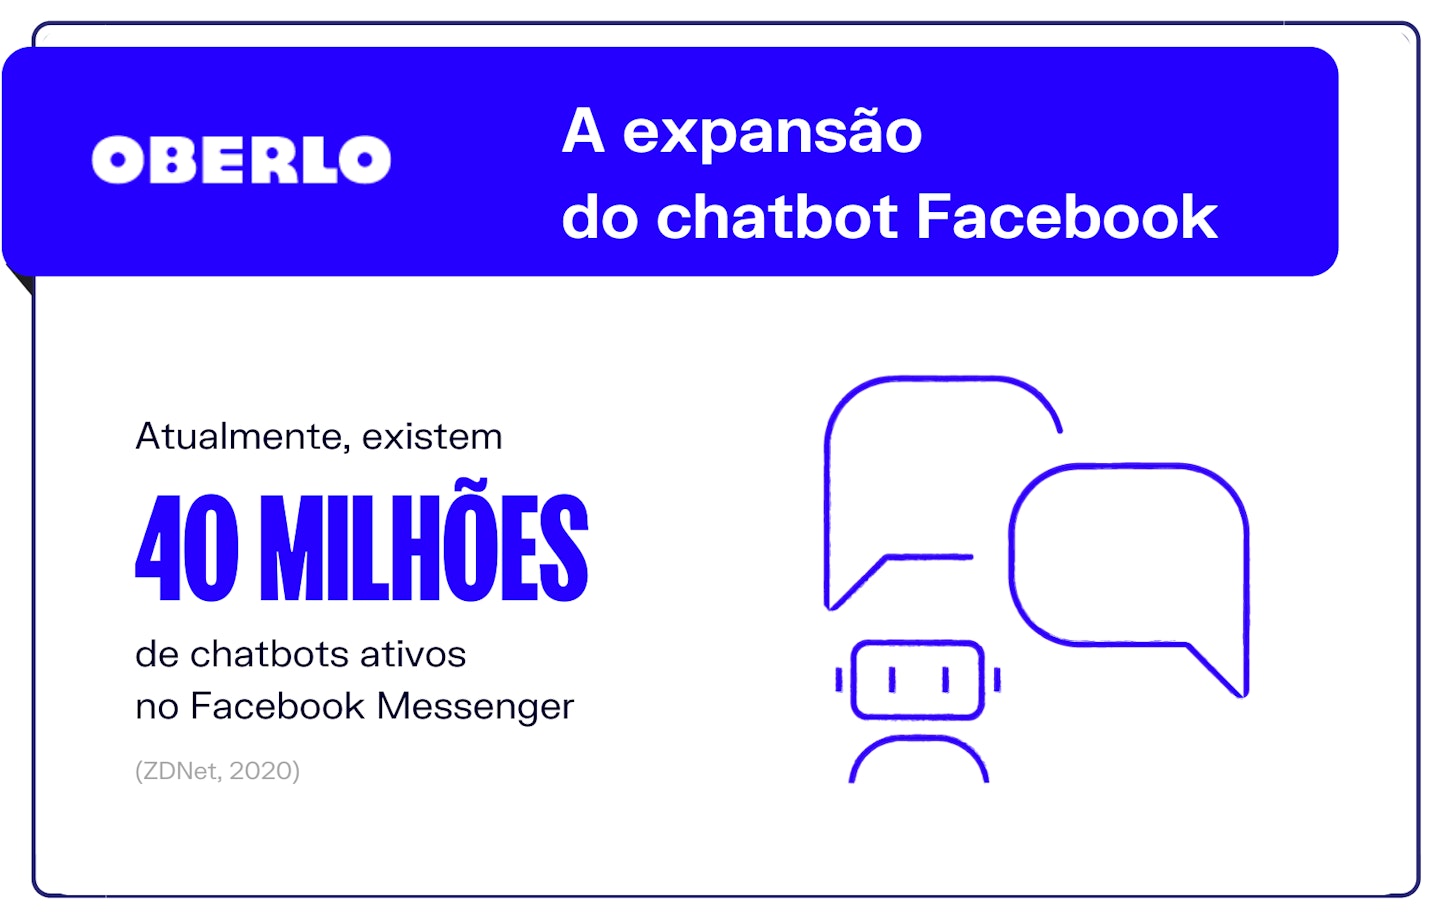 Facebook trends: a expansão do chatbot Facebook 